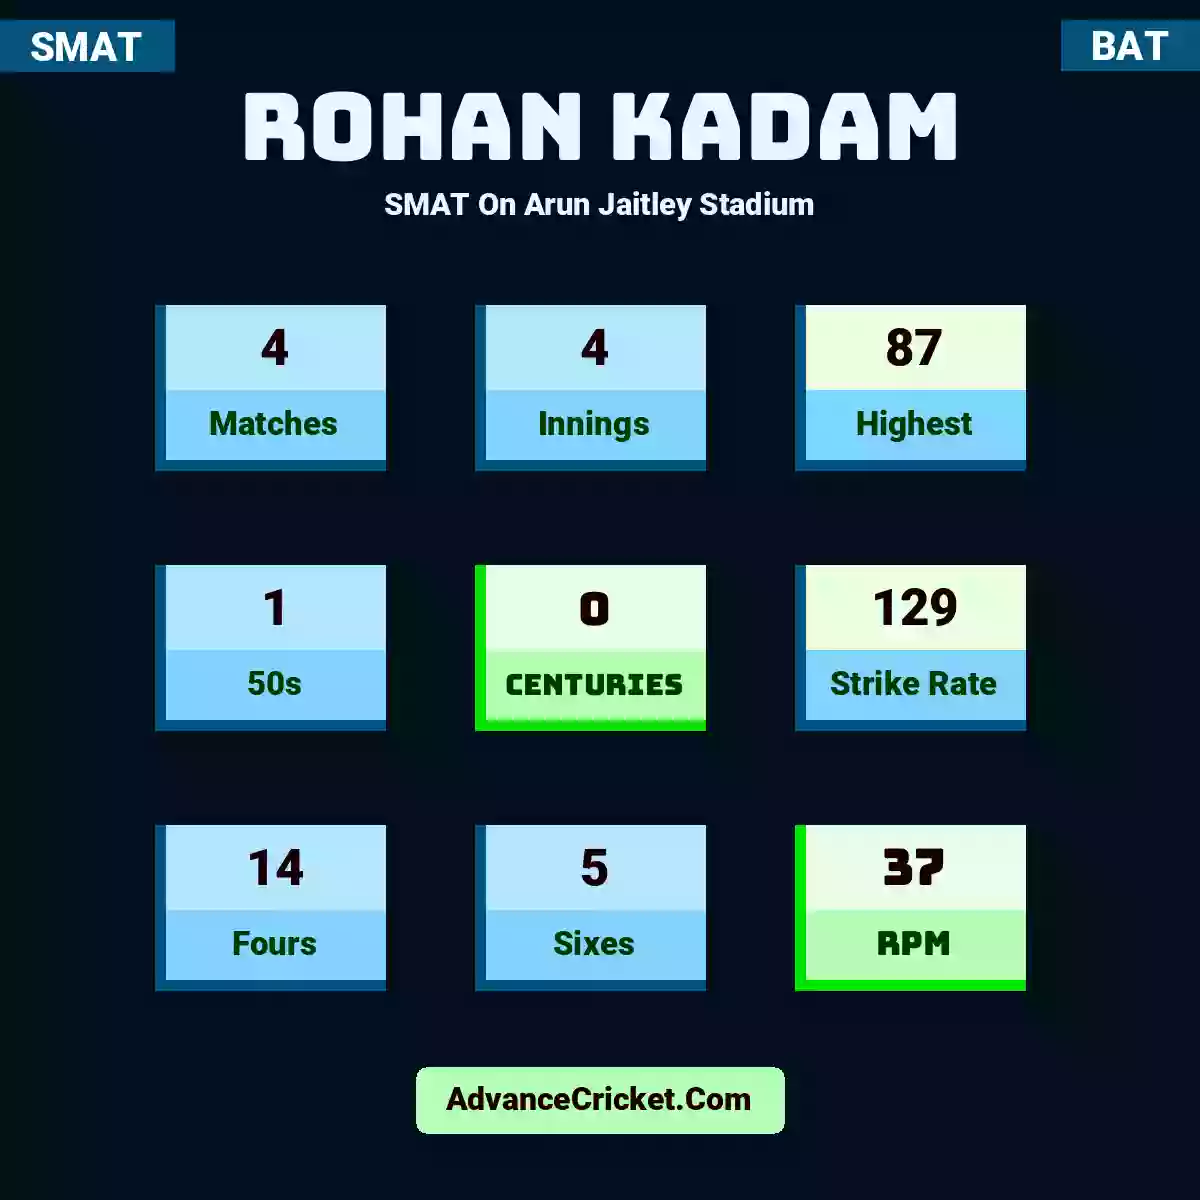 Rohan Kadam SMAT  On Arun Jaitley Stadium, Rohan Kadam played 4 matches, scored 87 runs as highest, 1 half-centuries, and 0 centuries, with a strike rate of 129. R.Kadam hit 14 fours and 5 sixes, with an RPM of 37.